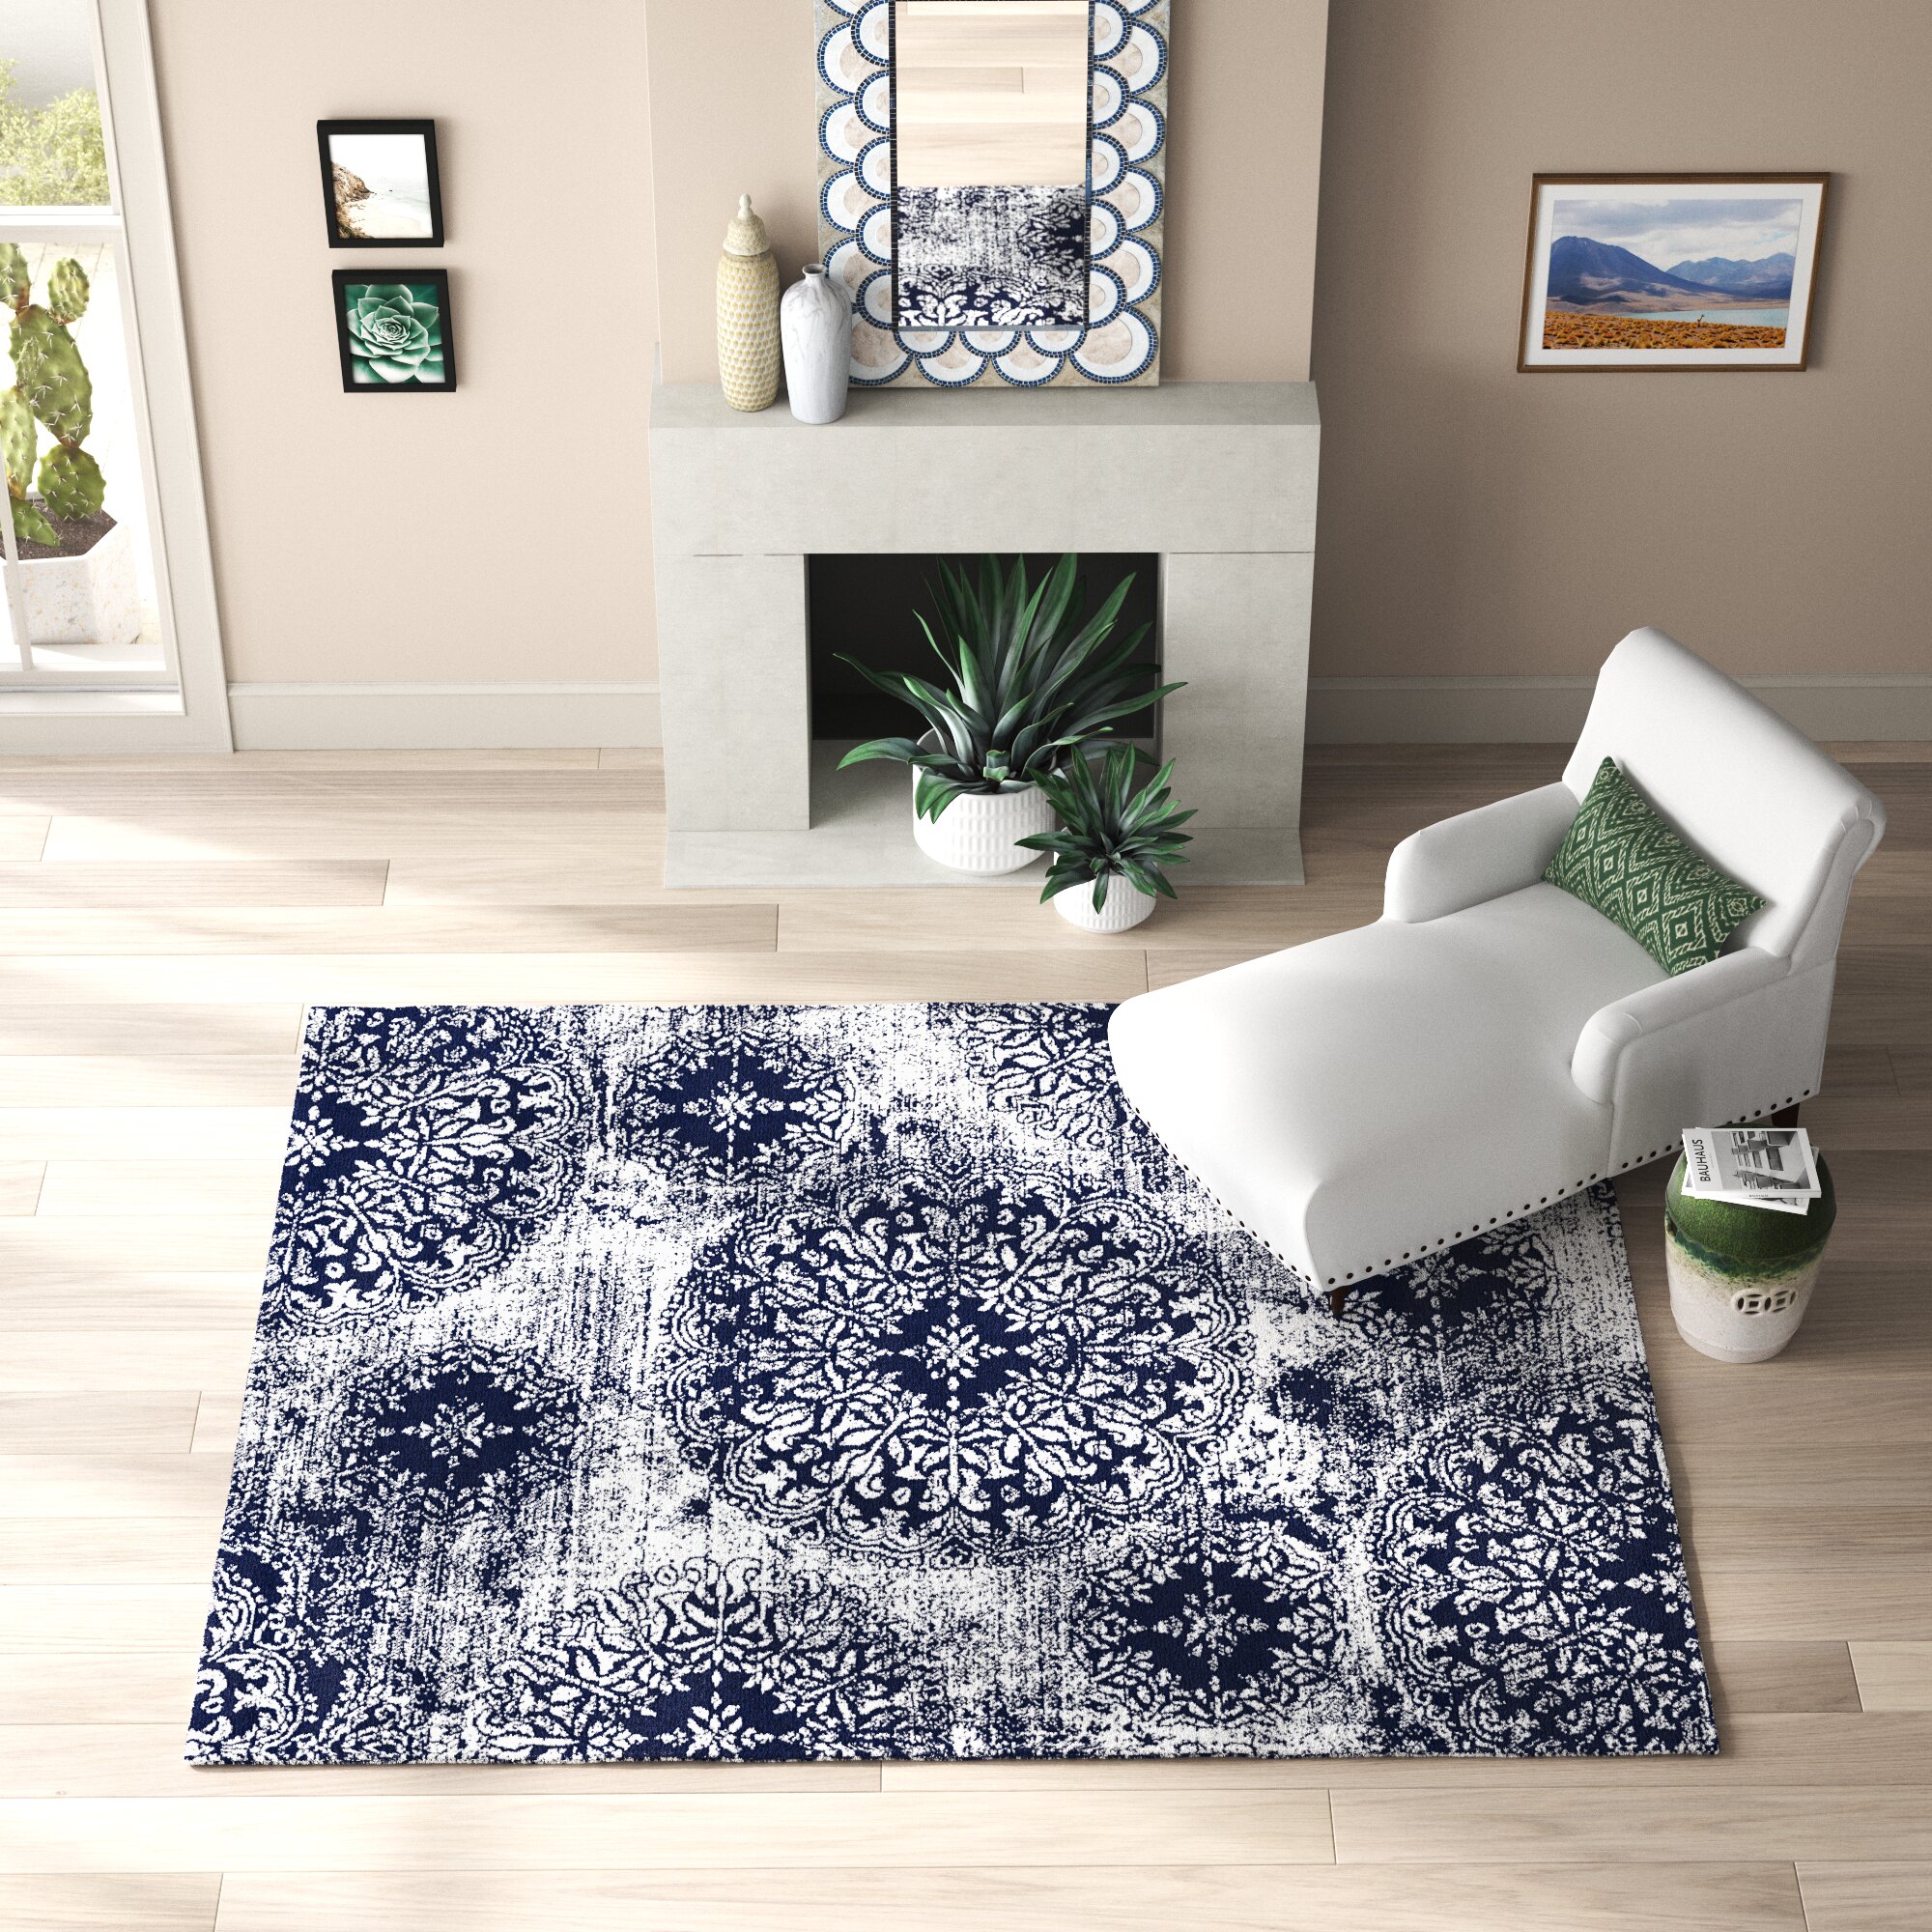 Floor Rug Large Area Carpet for Living Room Dining Geometric Blue Accent Runner 